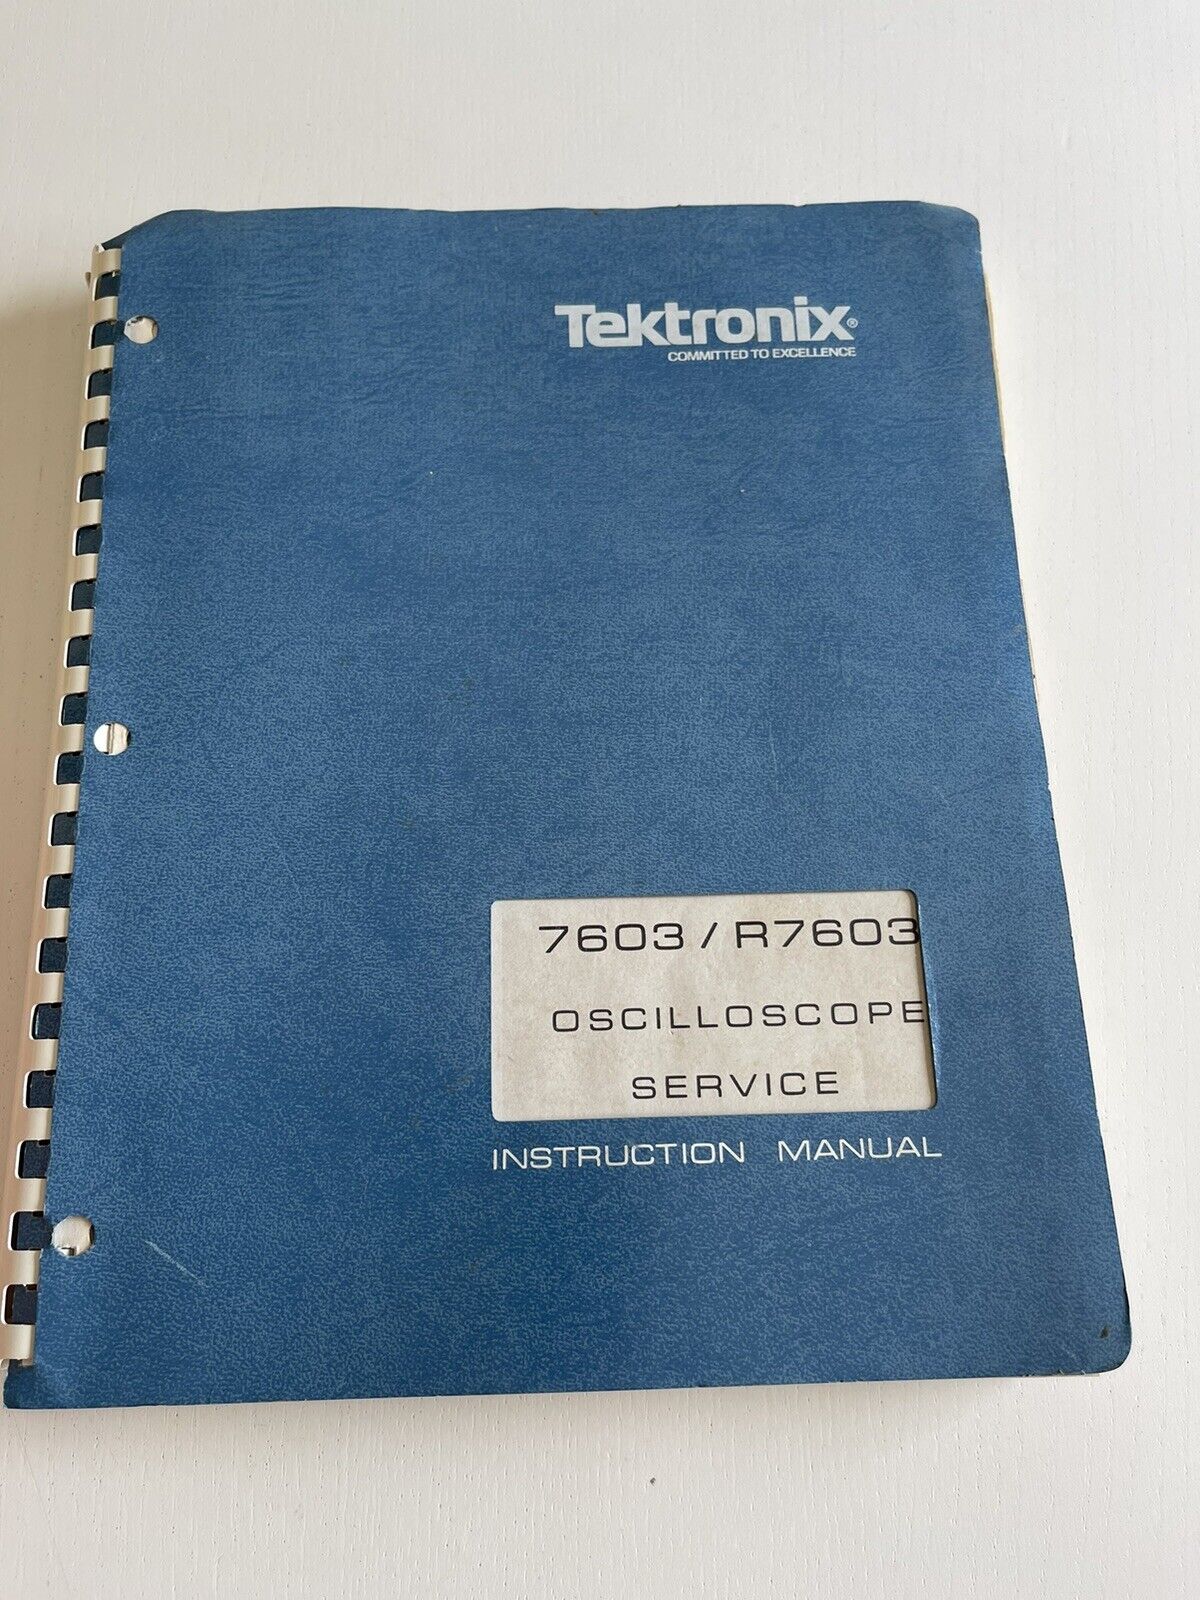 Tektronix 7603/R7603 Oscilloscope Service Manual